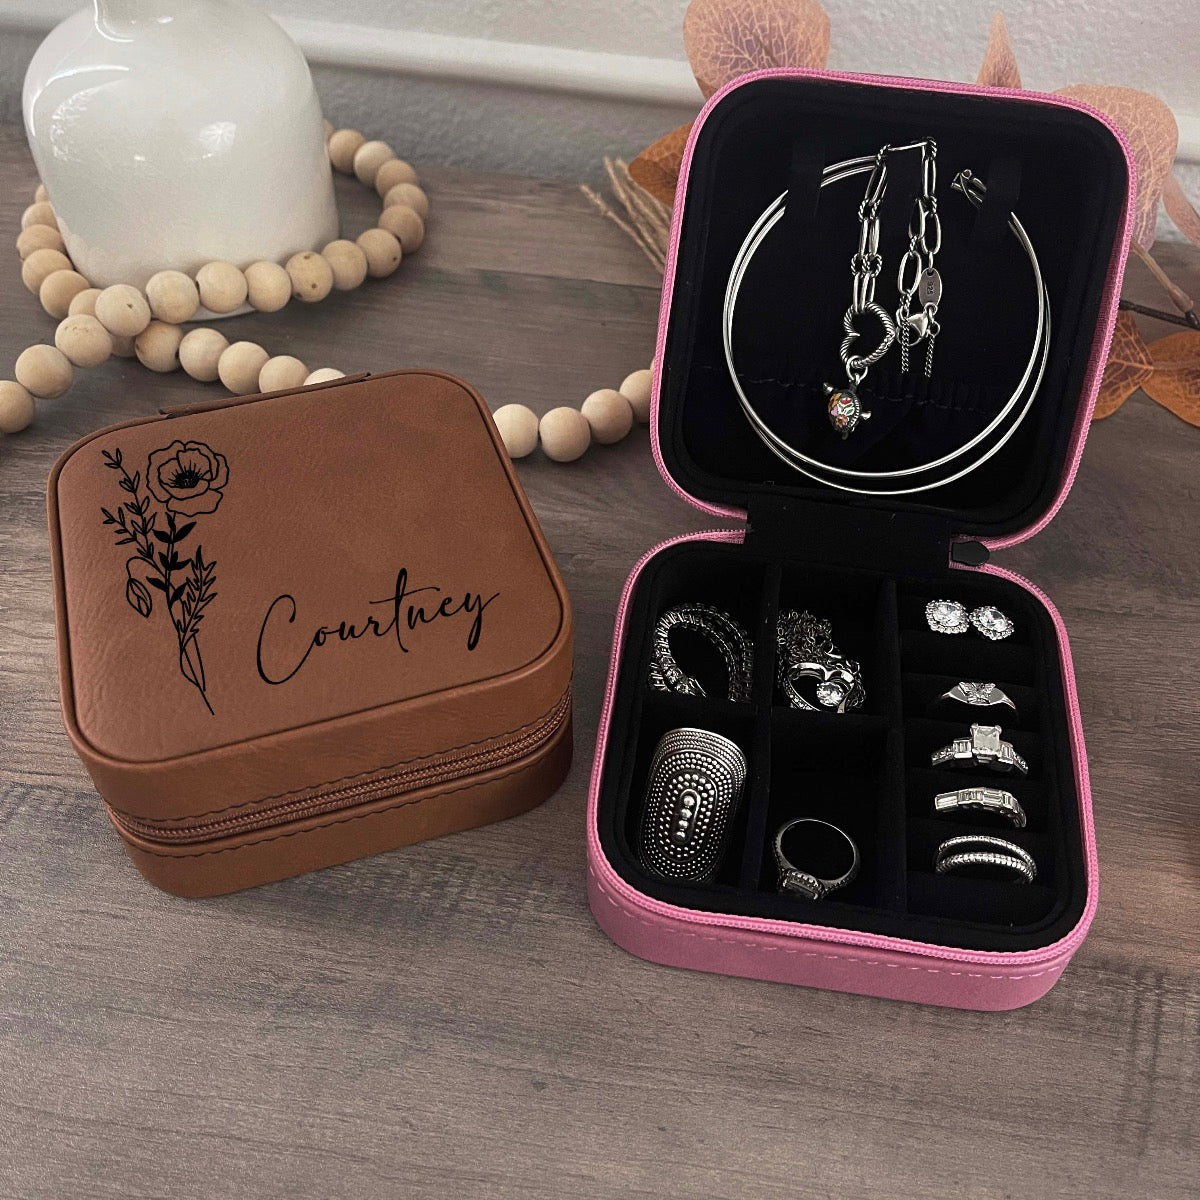 Personalized Travel Jewelry Cases & Jewelry Rolls